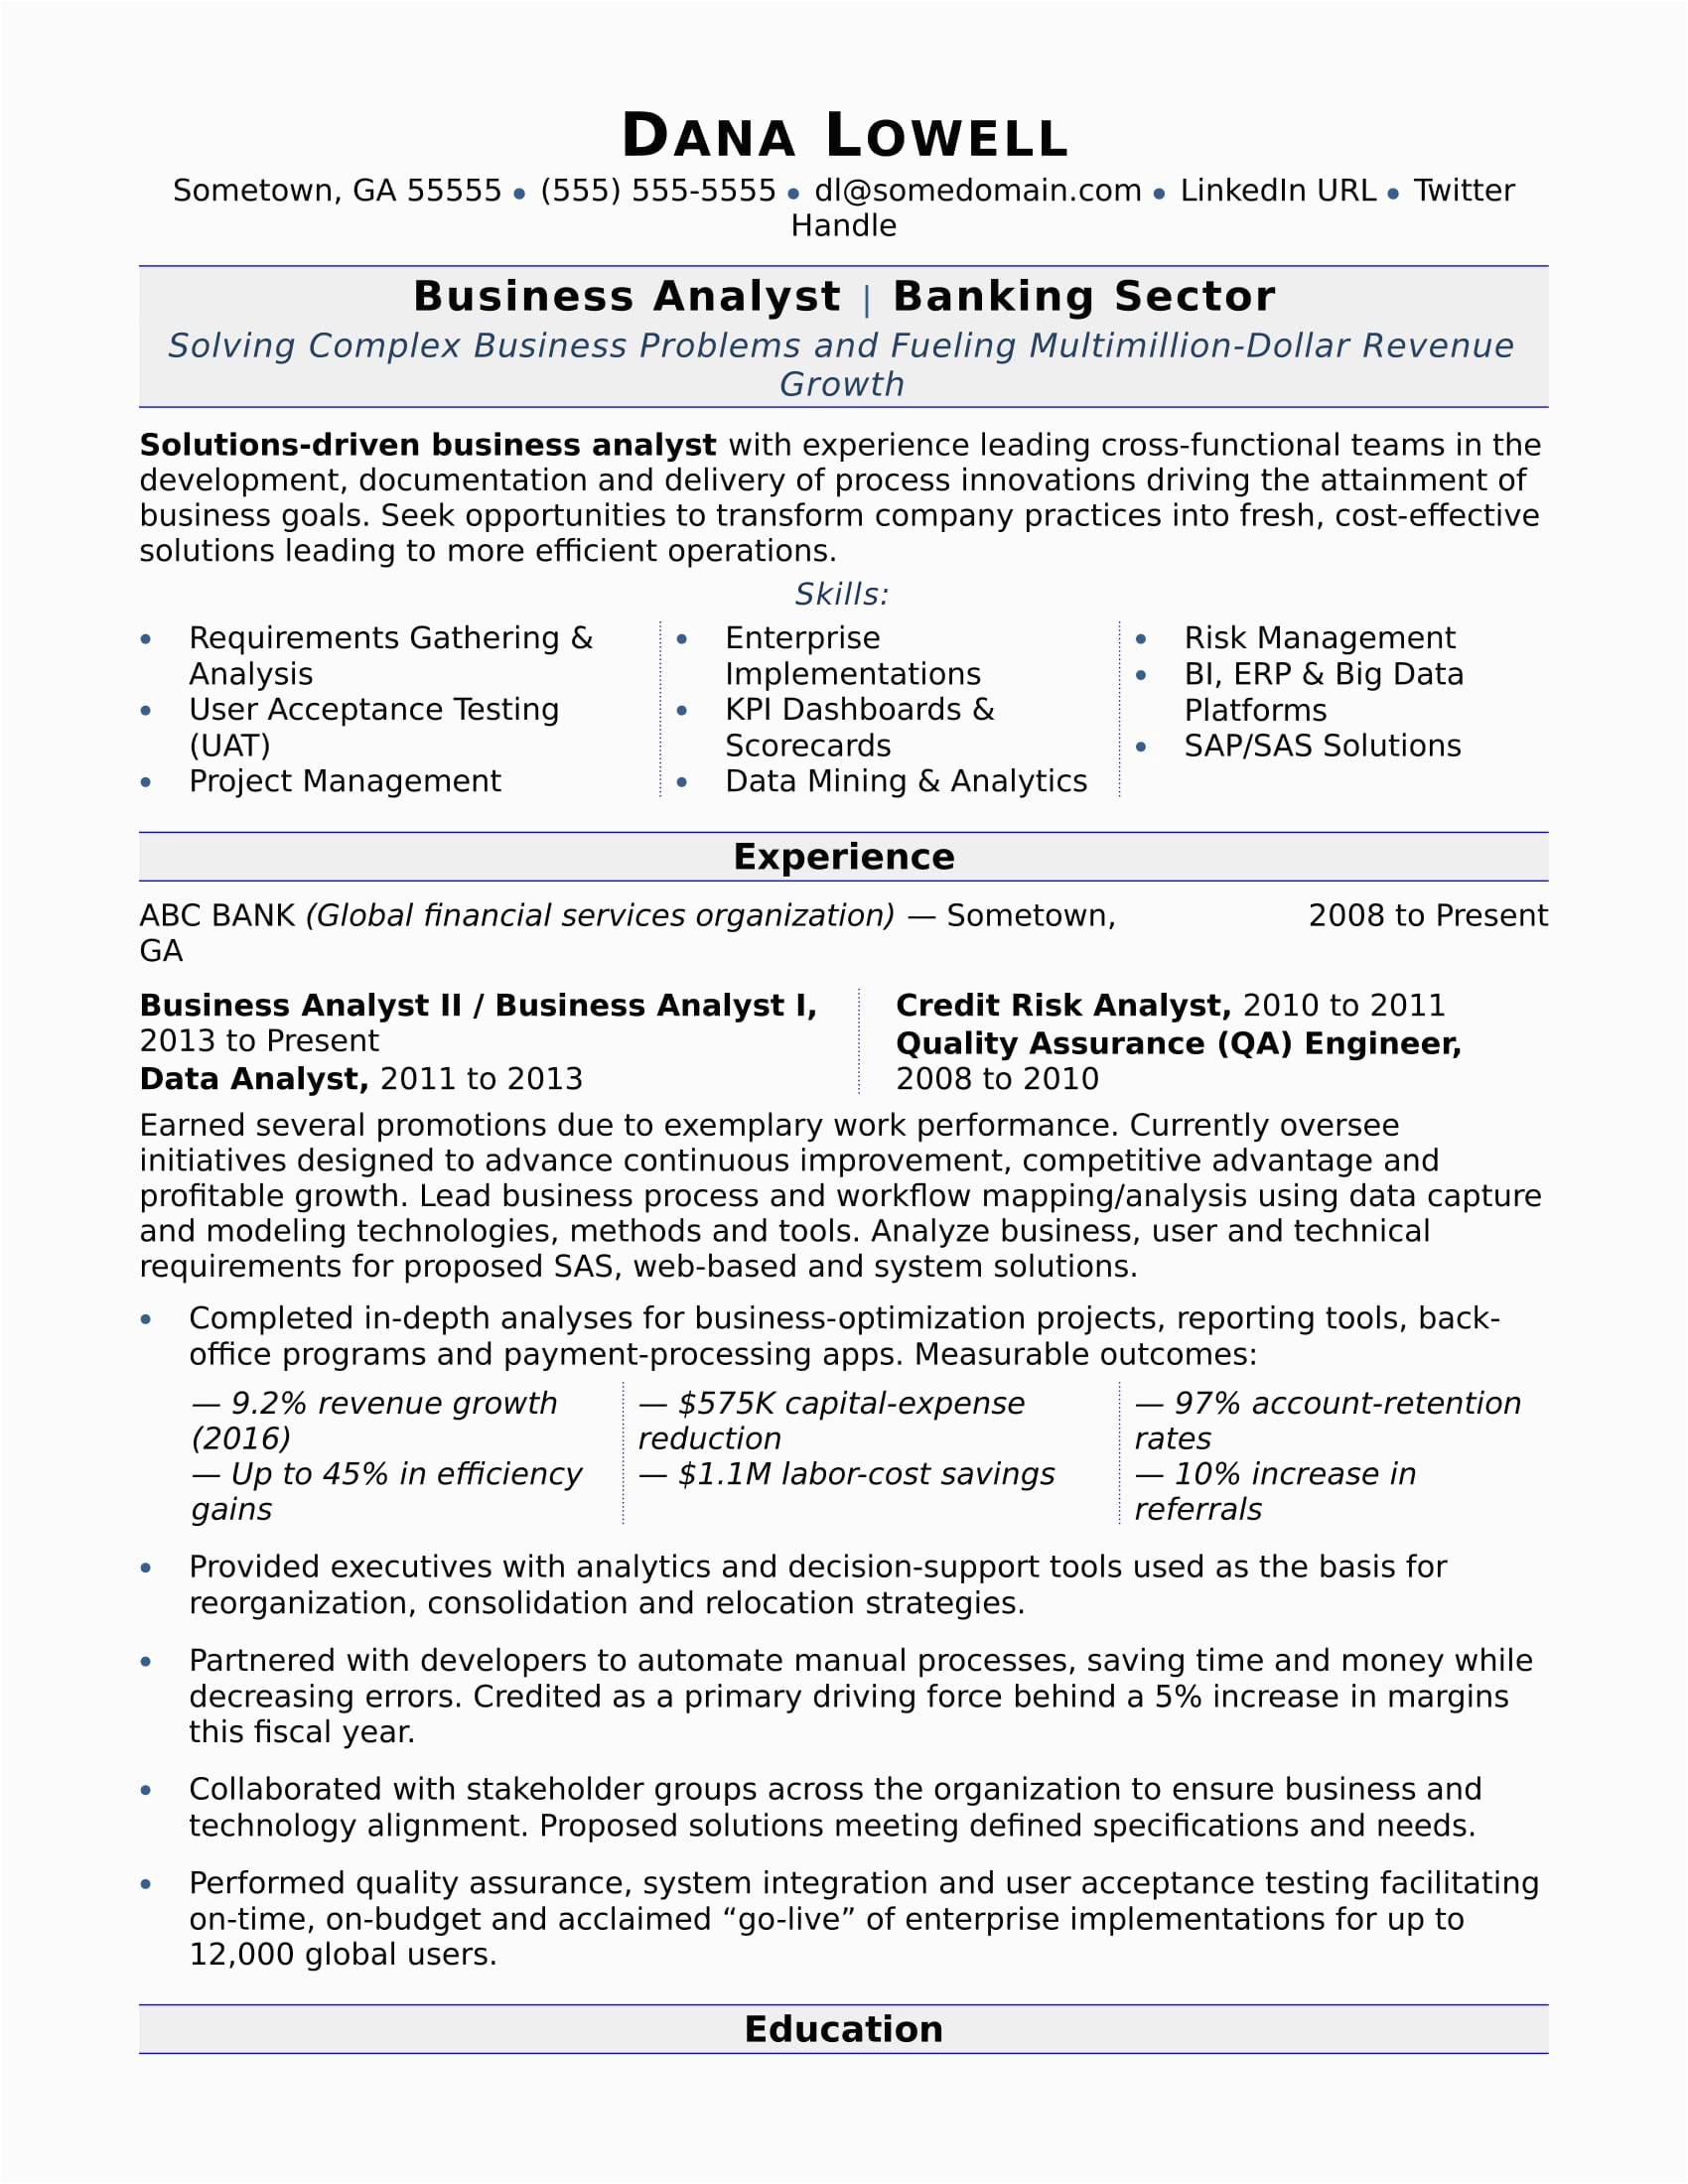 Data Analysis Business Analyst Resume Sample Business Analyst Resume Sample